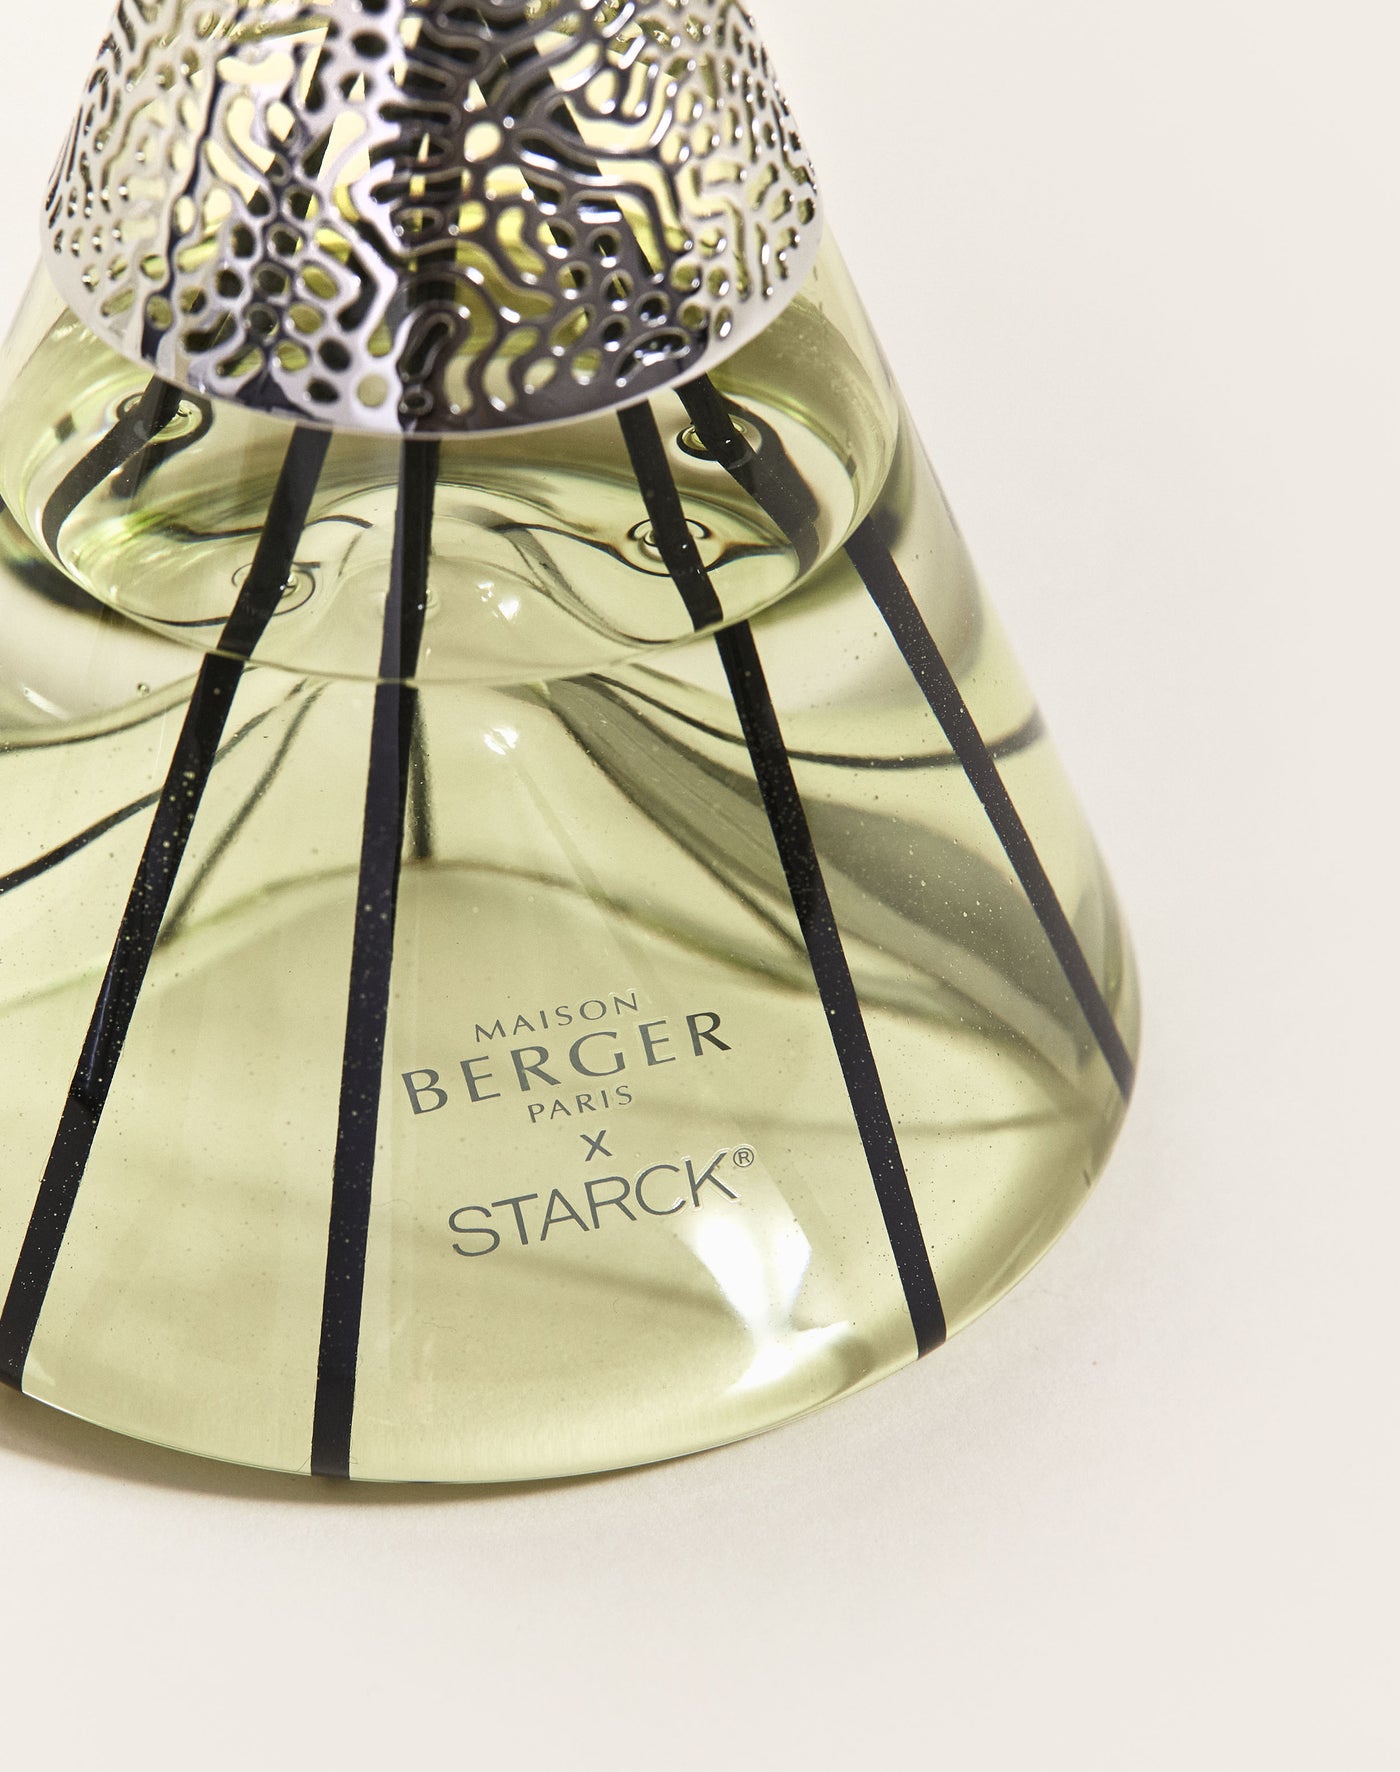 Parfumverspreider by Starck Peau d'Ailleurs